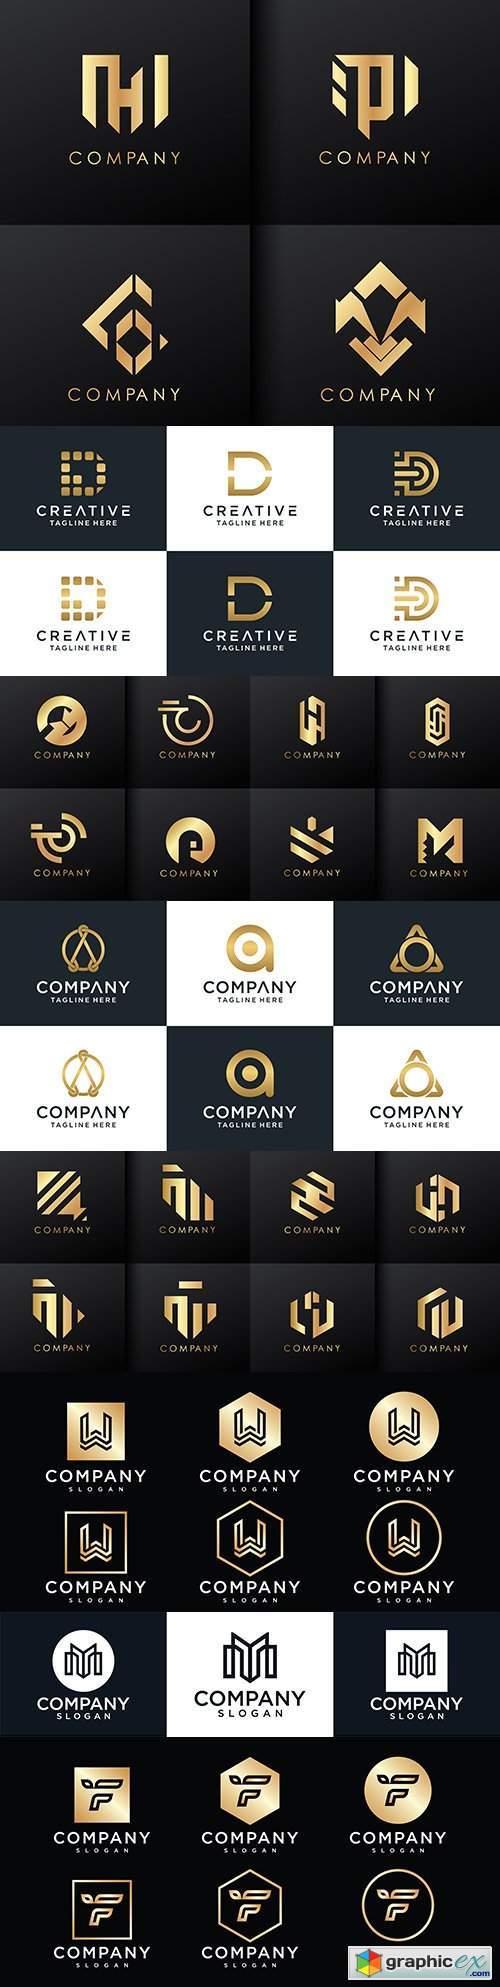 Brand name company business corporate logos design 20